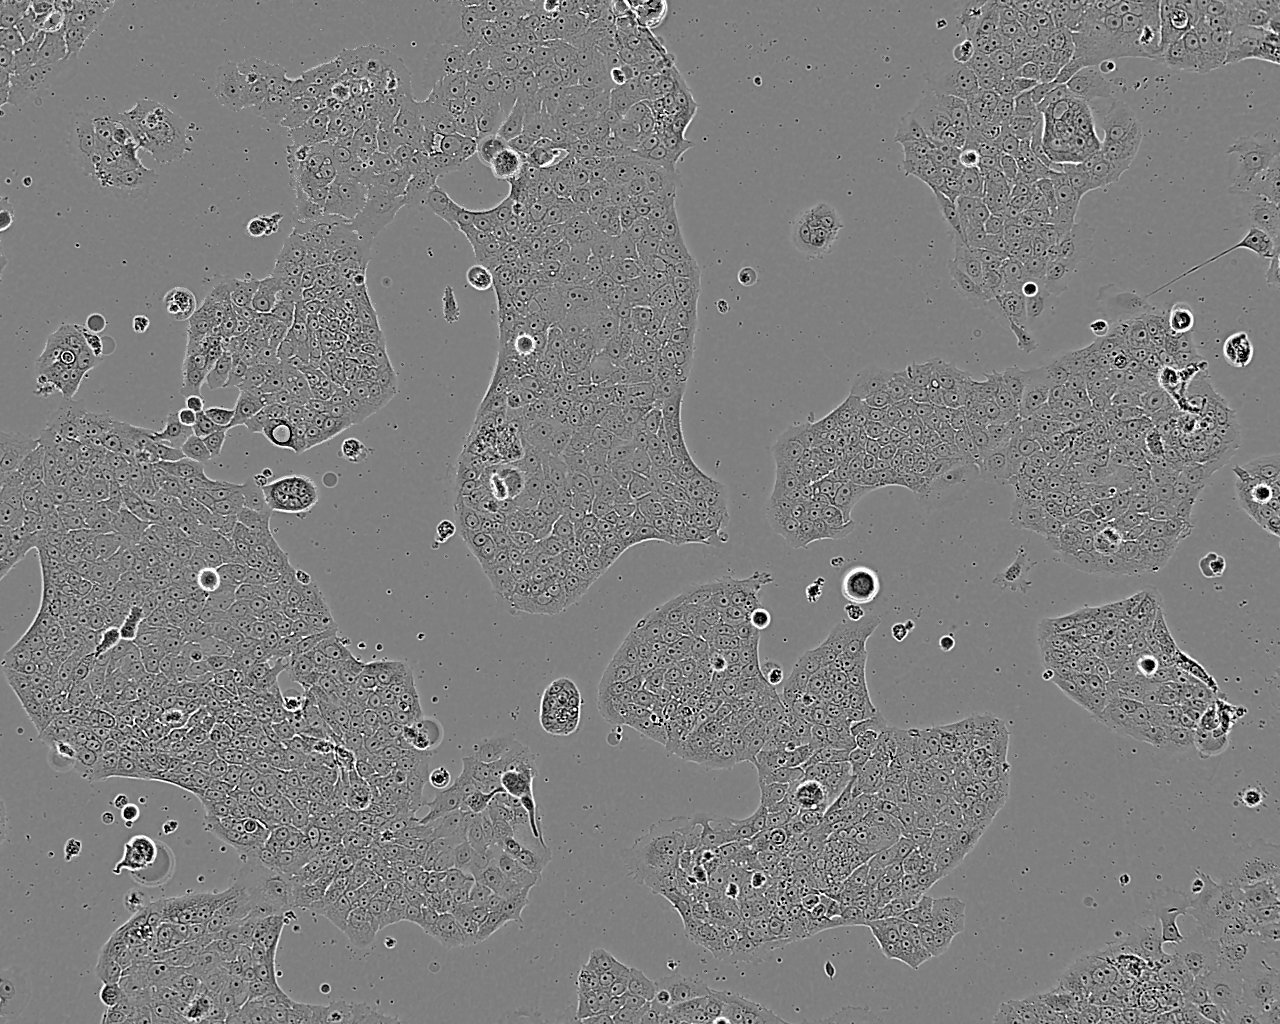 NCI-H2444 epithelioid cells人非小细胞肺癌细胞系,NCI-H2444 epithelioid cells